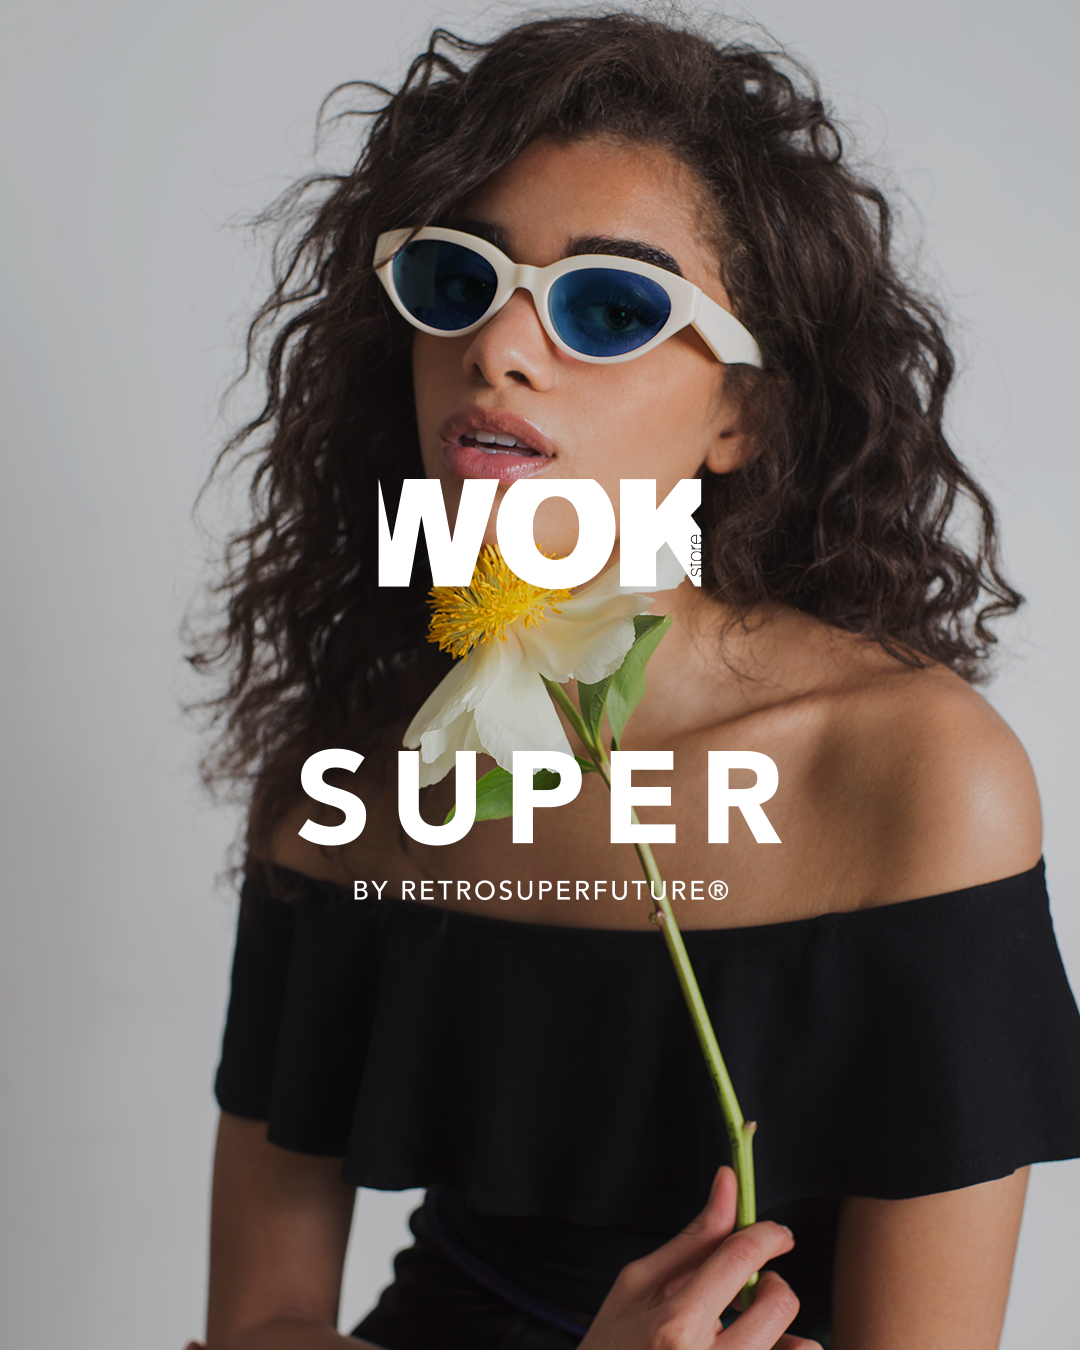 SUPER / WOK